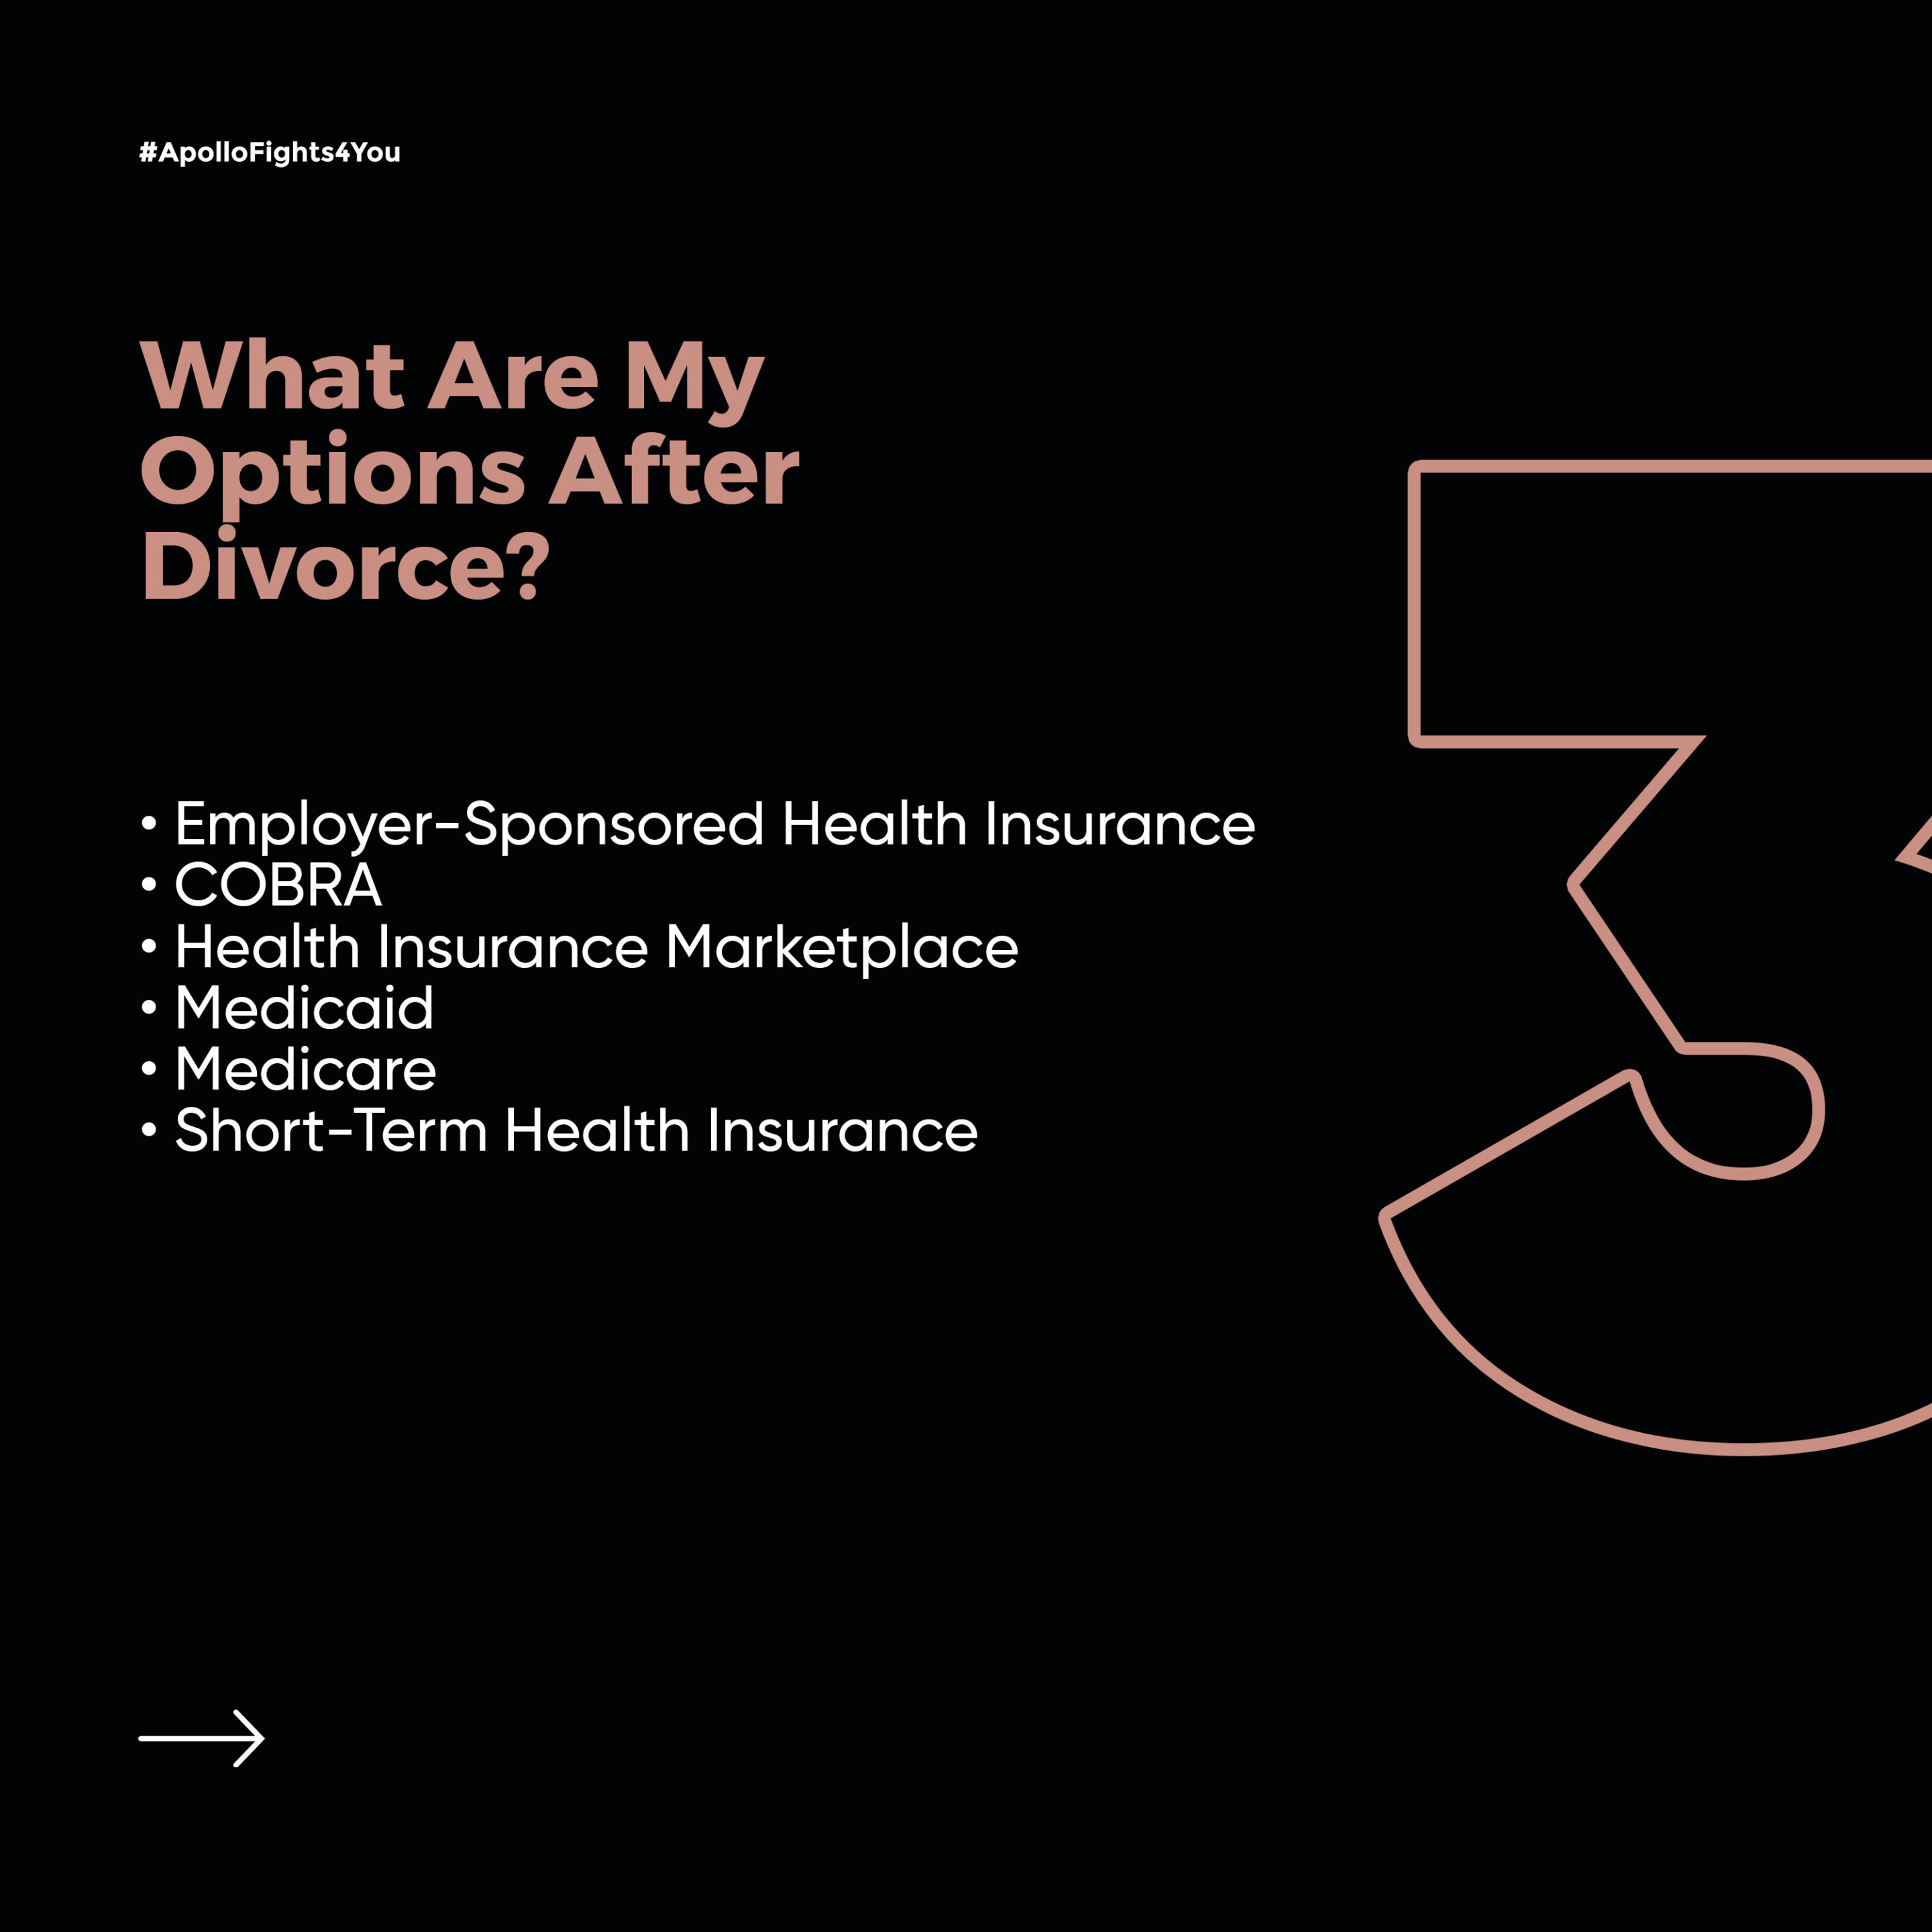 Court Ordered Health Insurance After Divorce